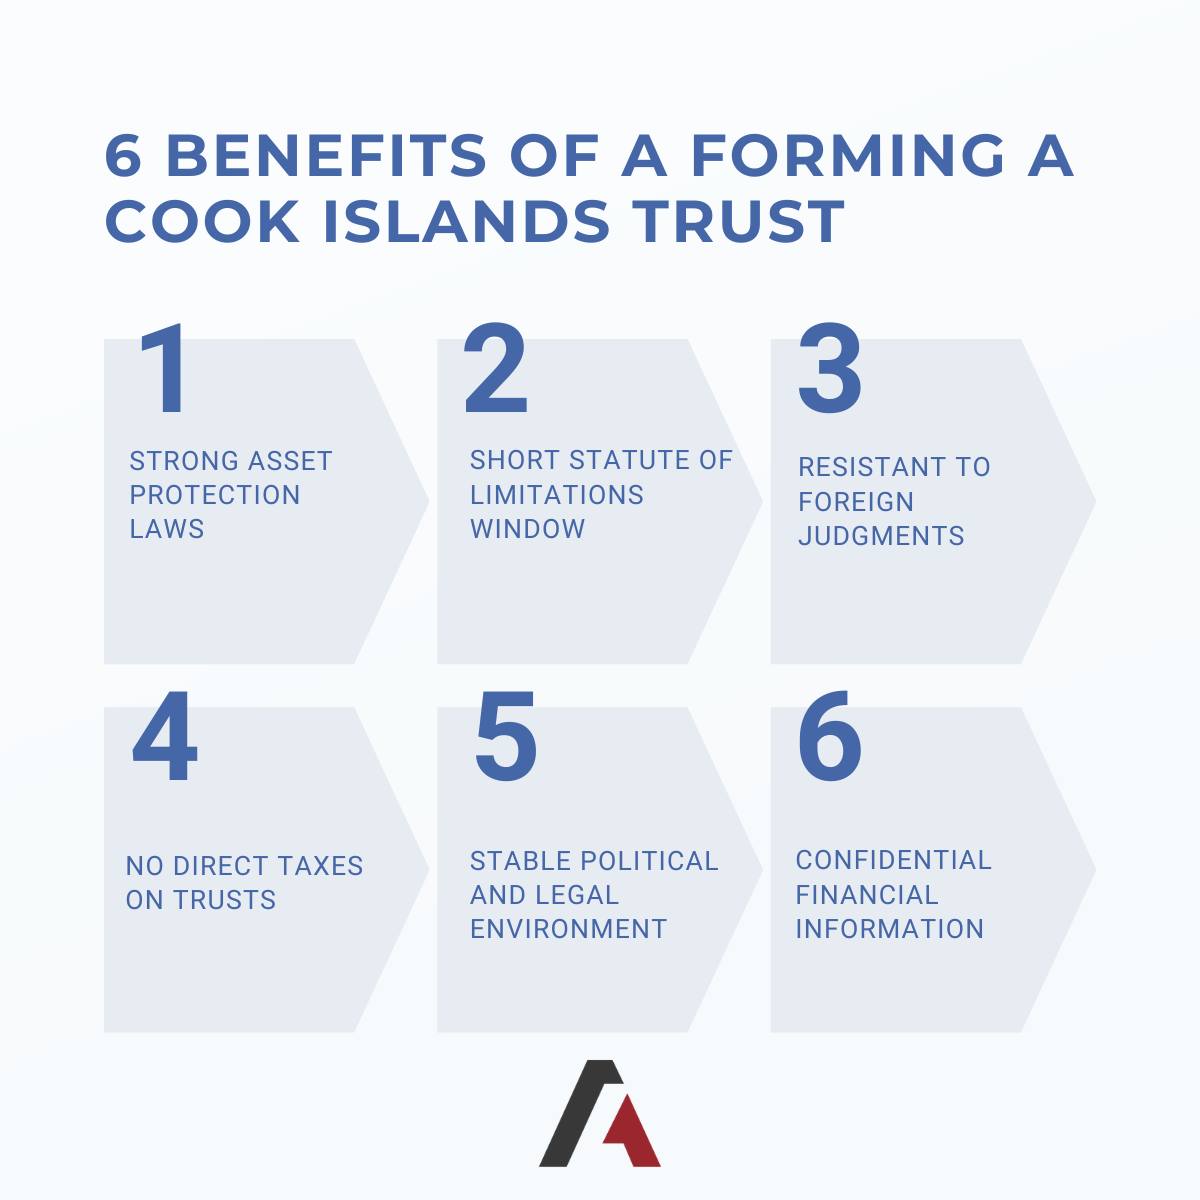 6 benefits of a Cook Islands Trust